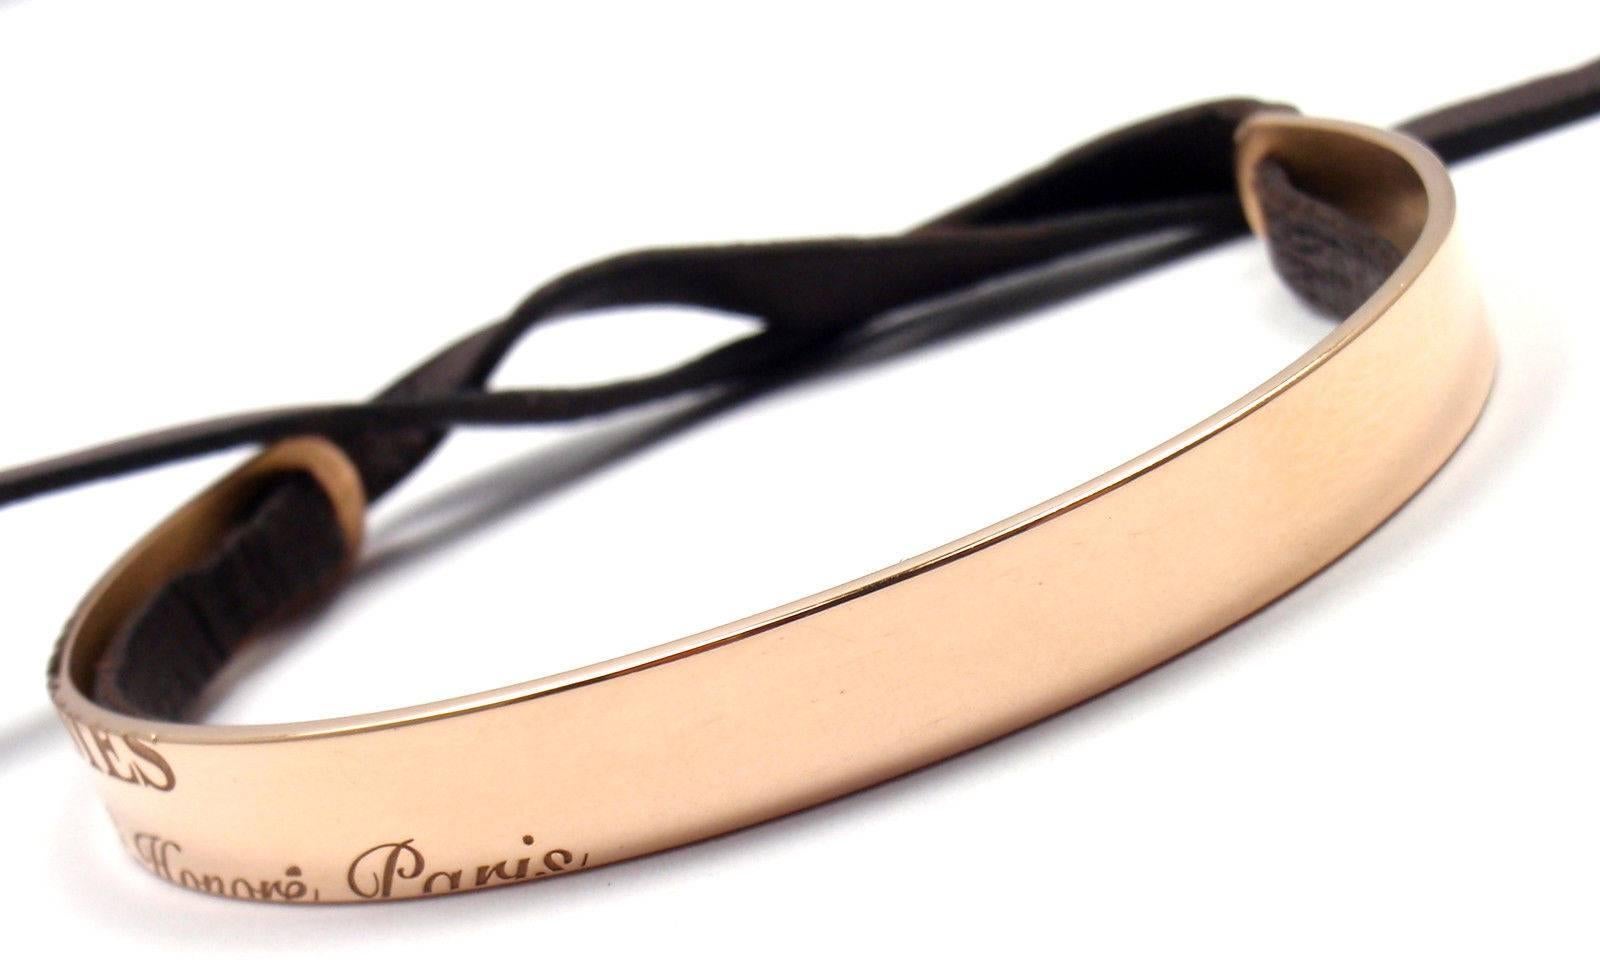 18k Rose Gold And Black Leather Cuff Bangle Bracelet by Hermes Paris.  

Details:  
Length: 6.5